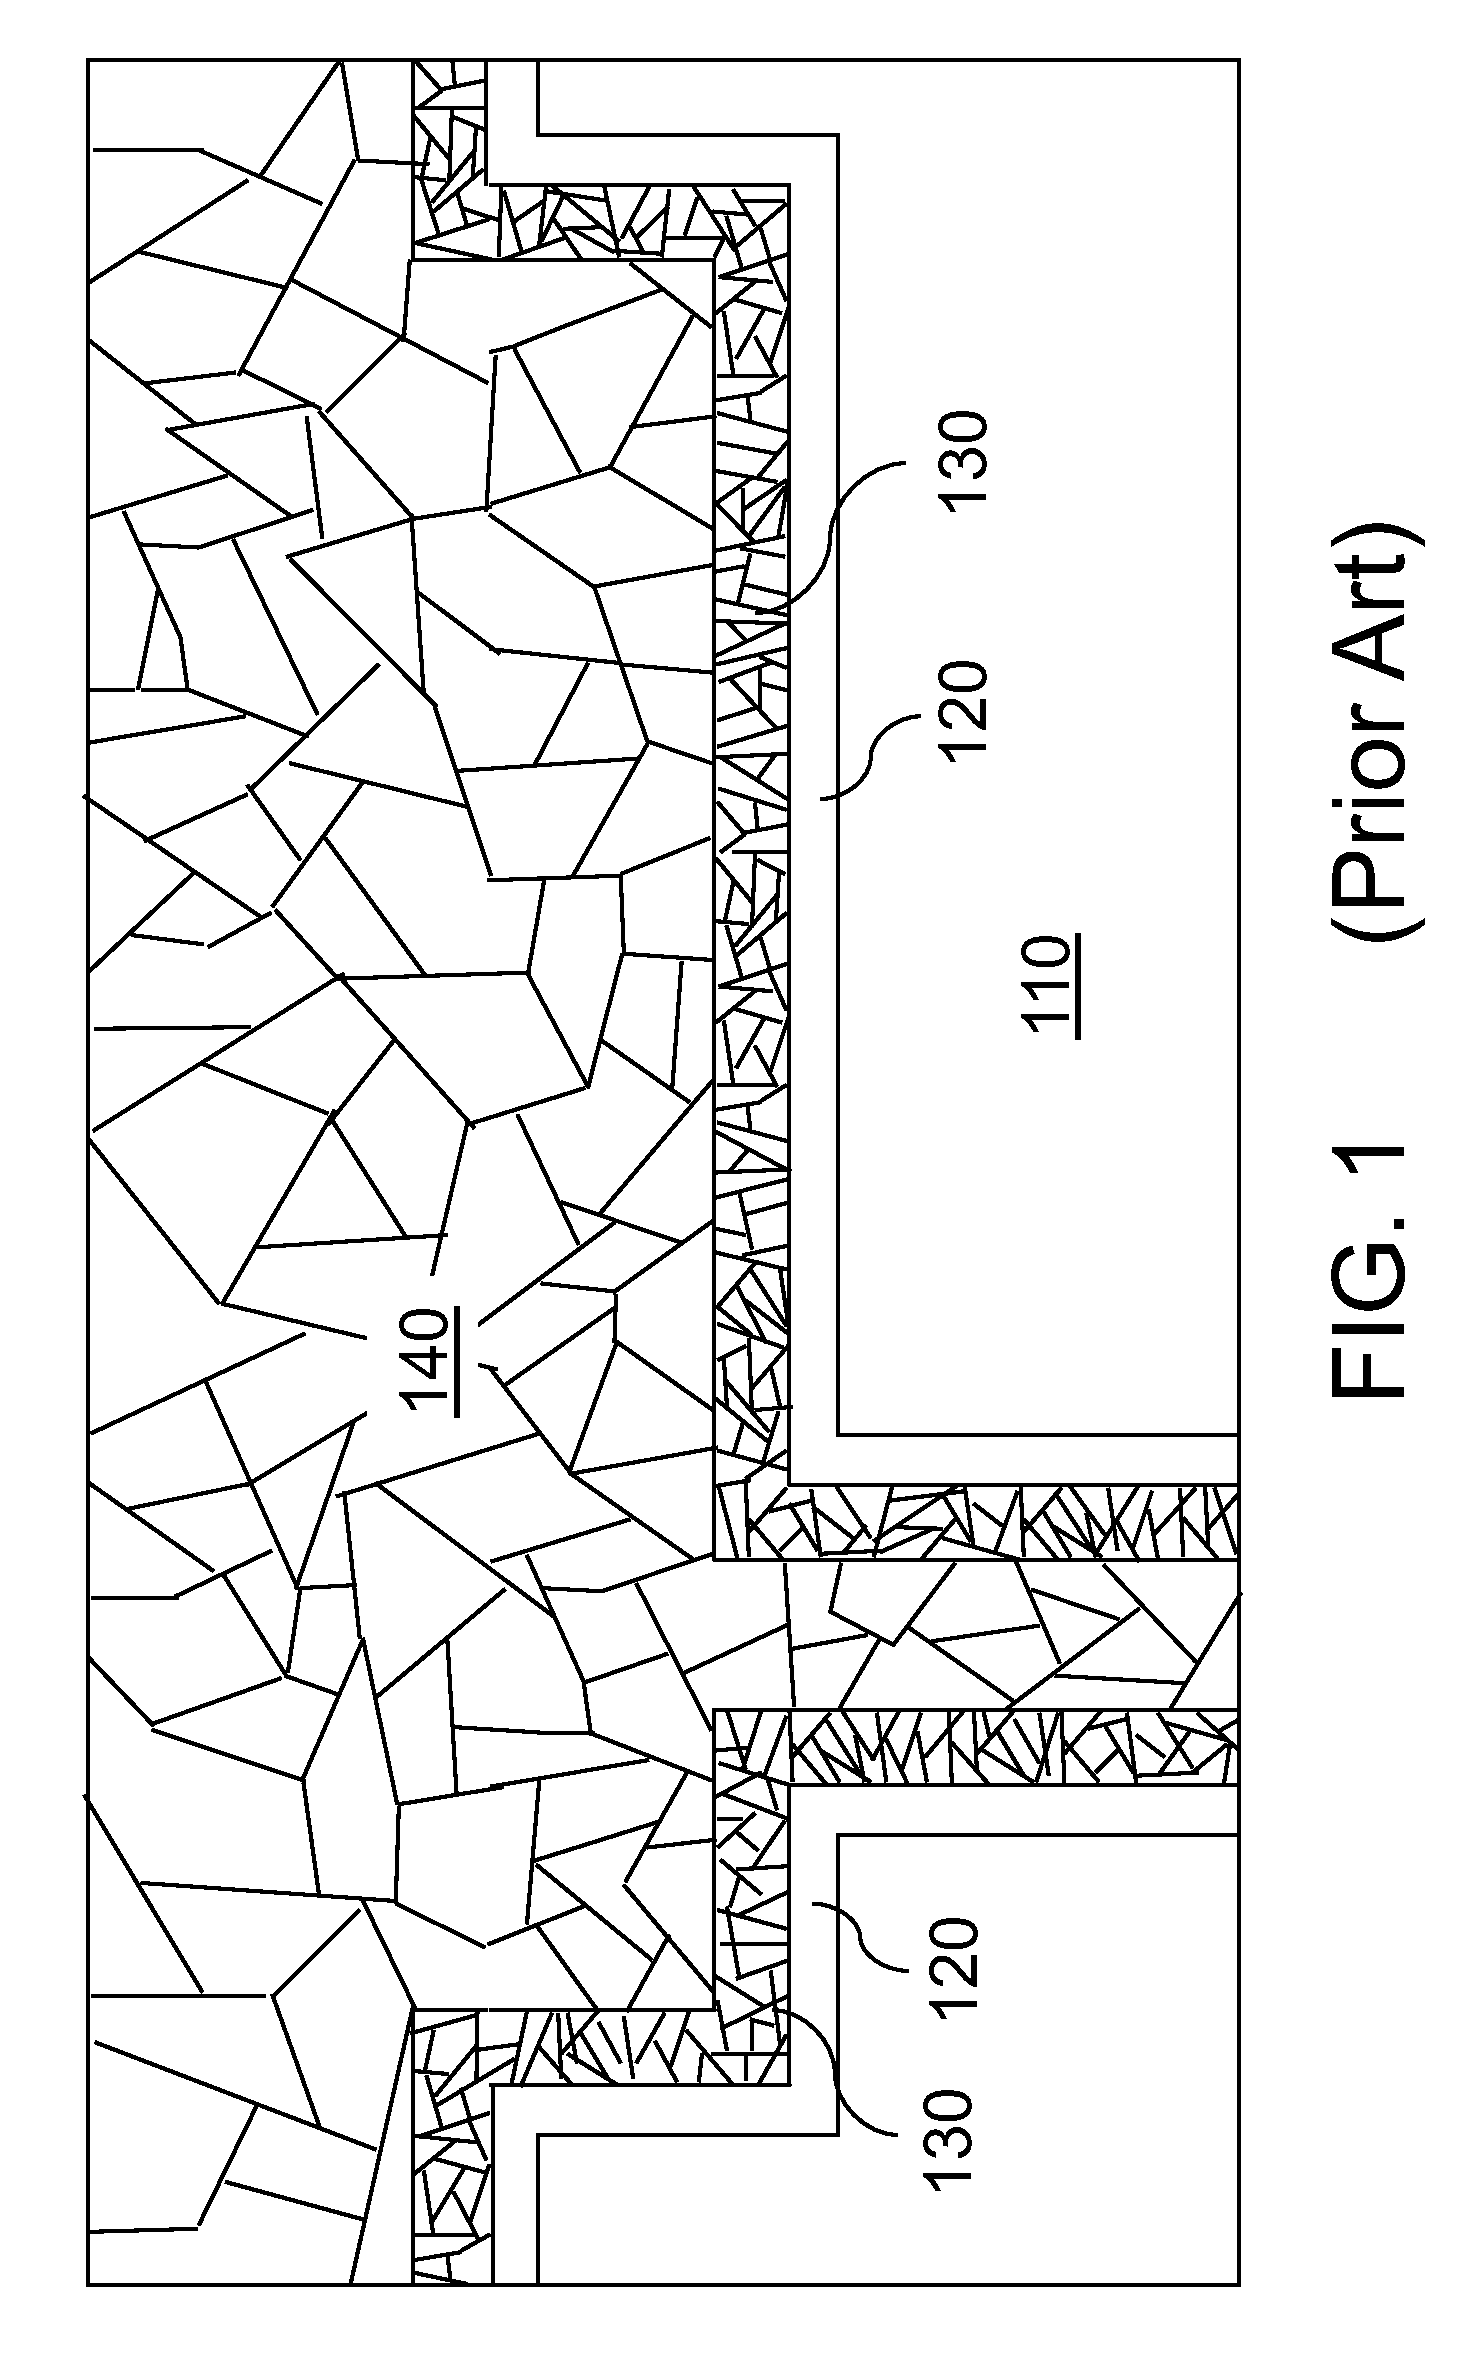 Microstructure modification in copper interconnect structure